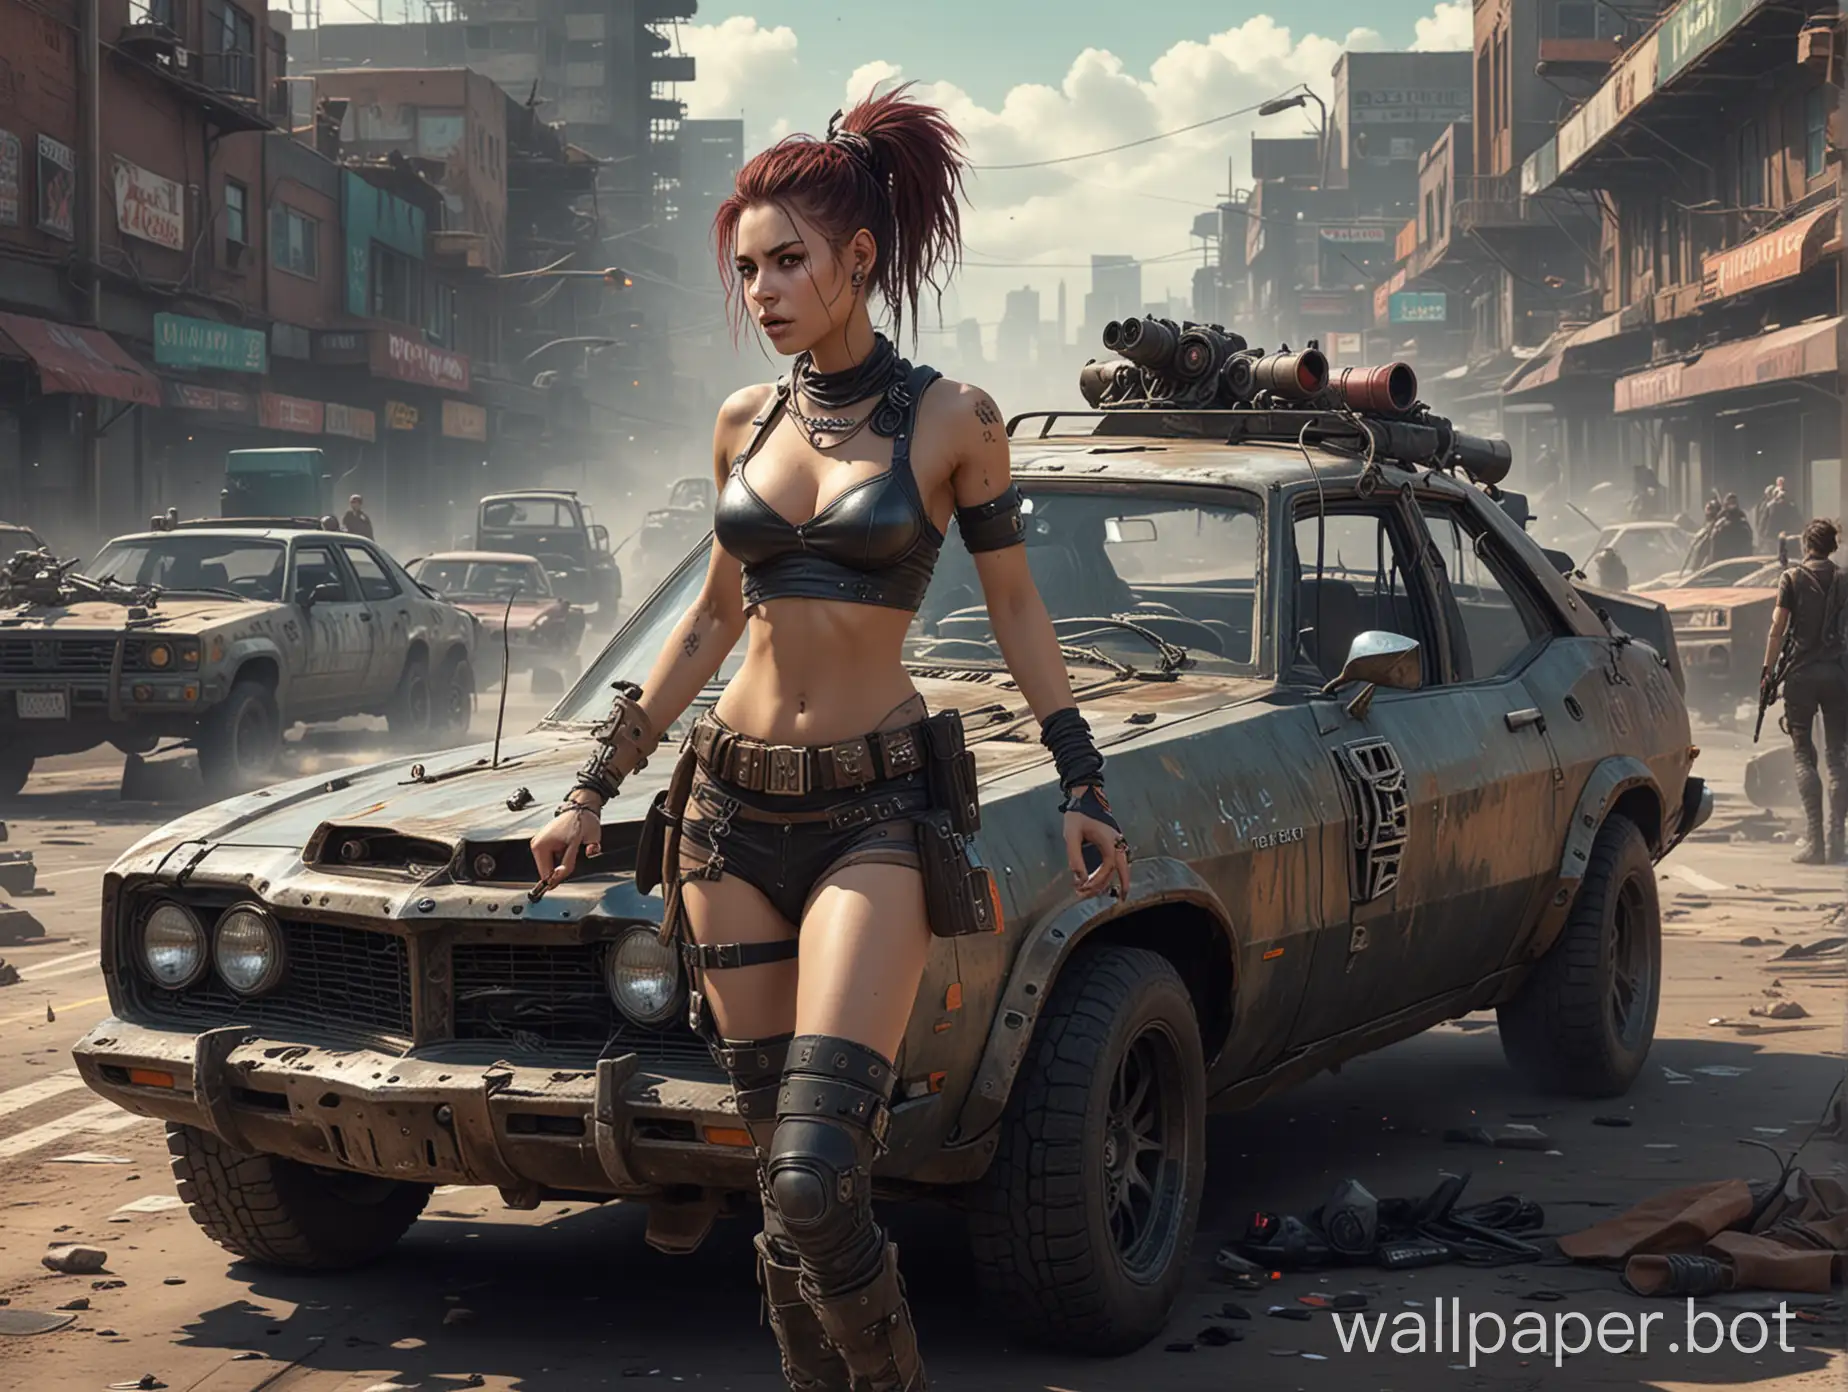 Cyberpunk-PostApocalypse-Road-Wars-Warrior-Girl-Battling-on-Cars